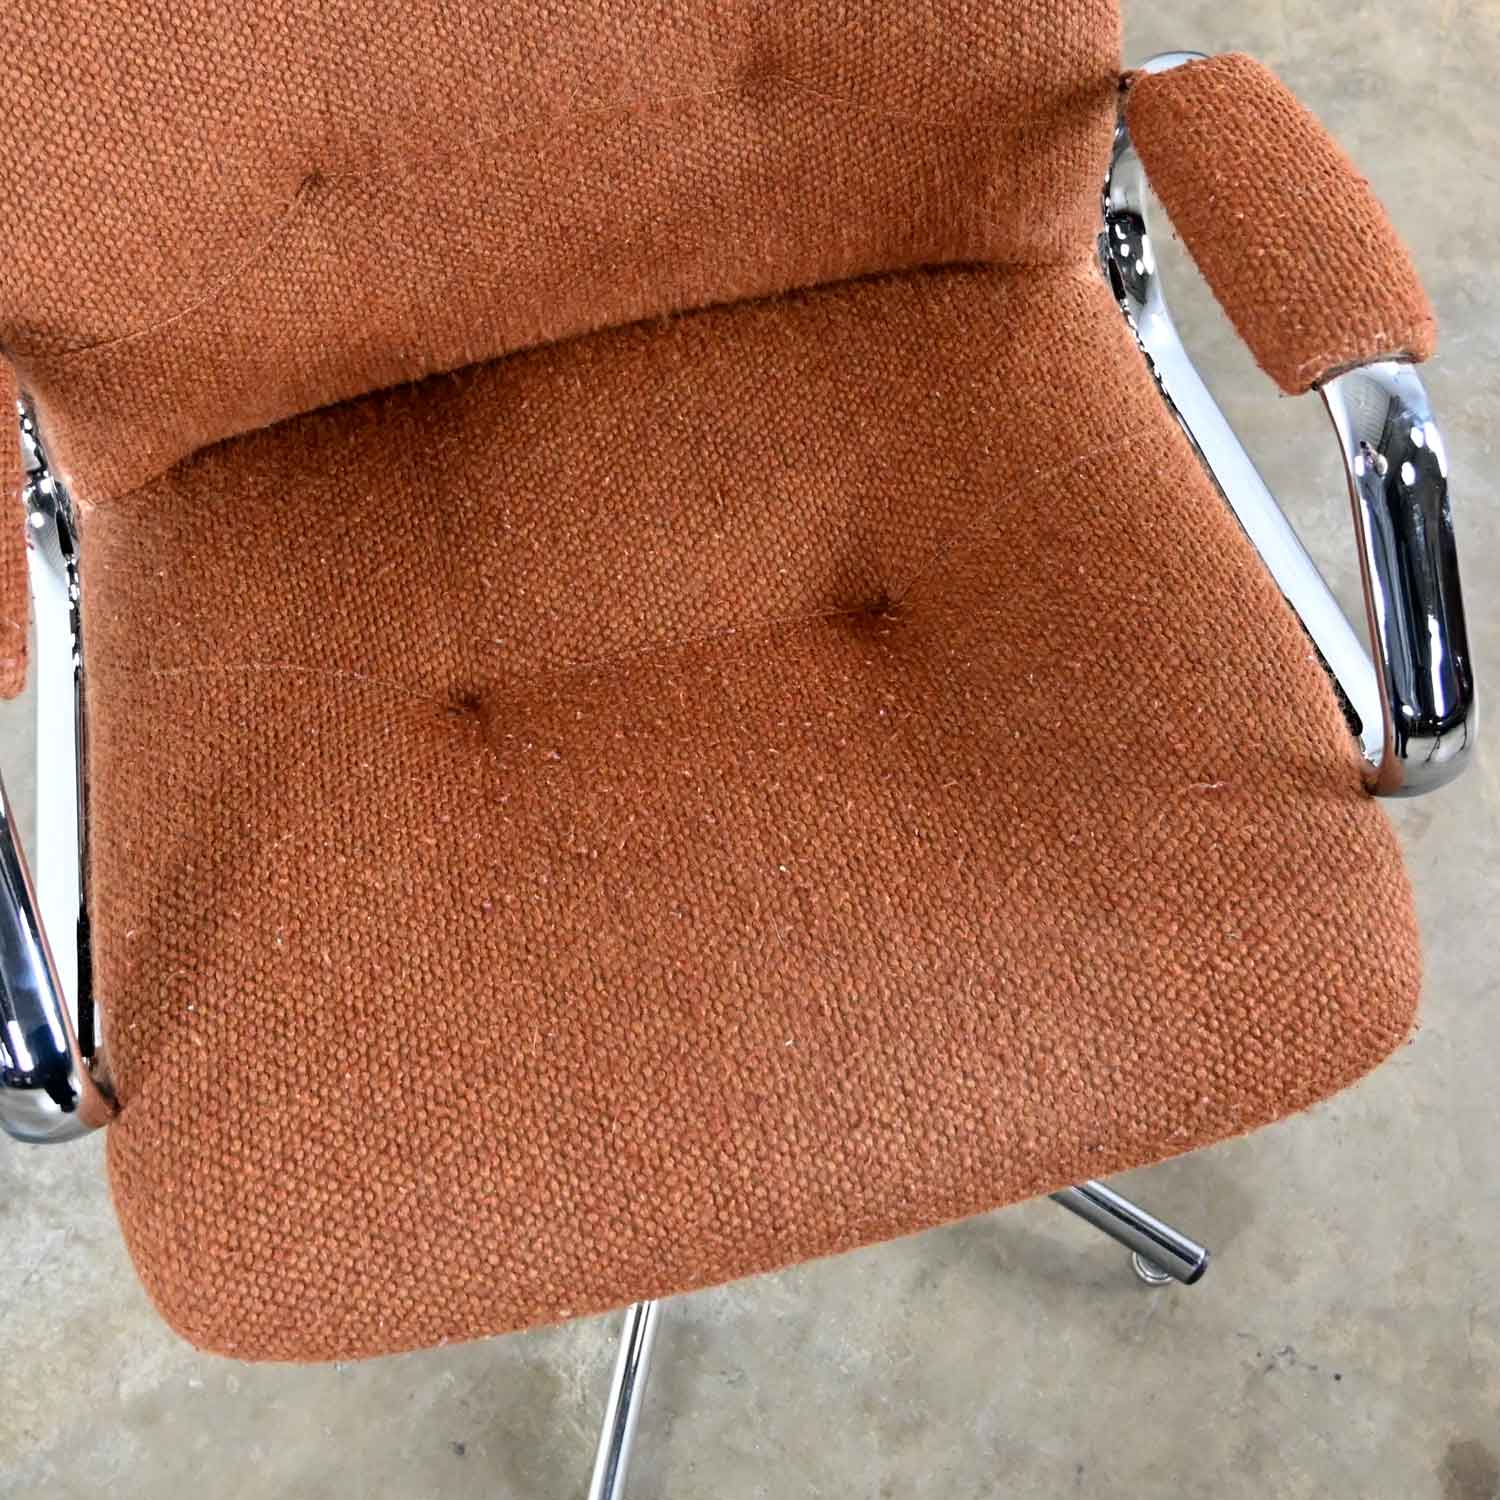 Steelcase Chrome & Original Brown Hopsack Upholstery Swivel Chair Model #454 Style Charles Pollock